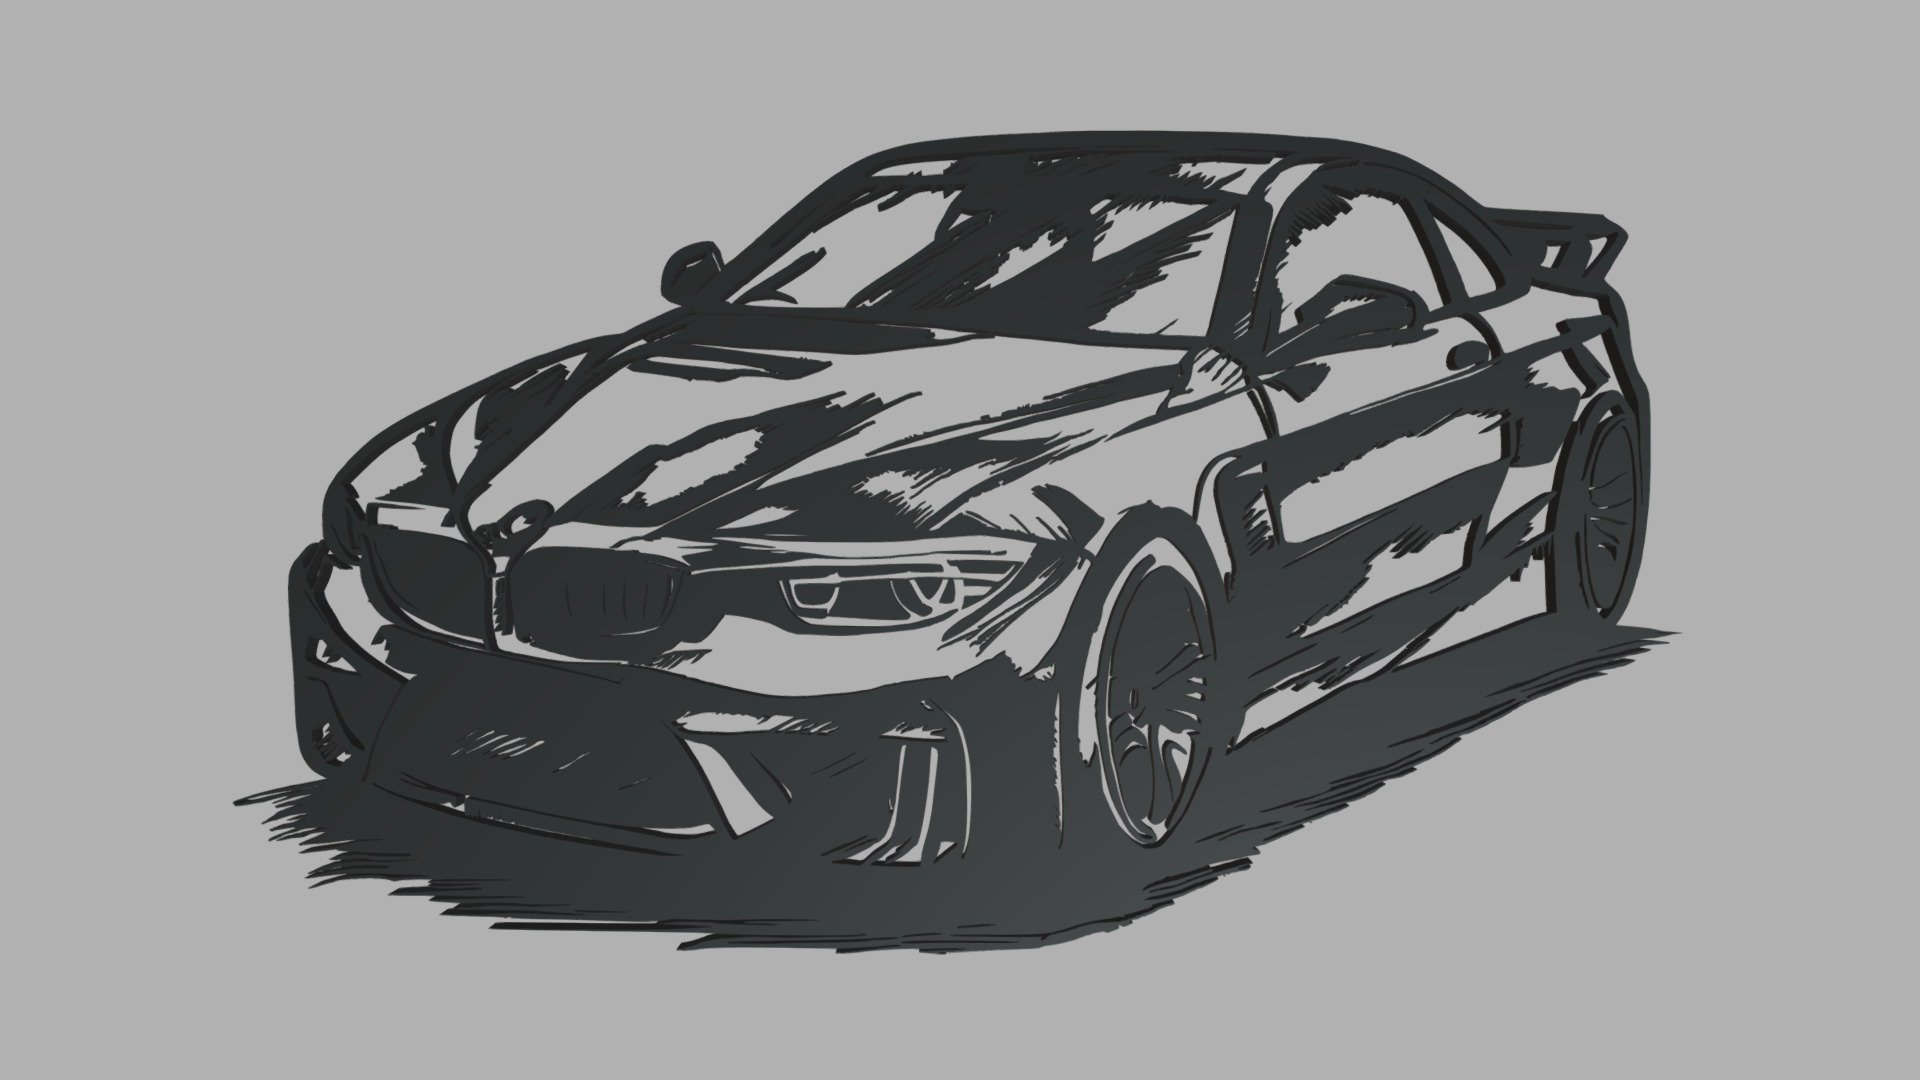 BMW drift car sketch - Creativity post - Imgur